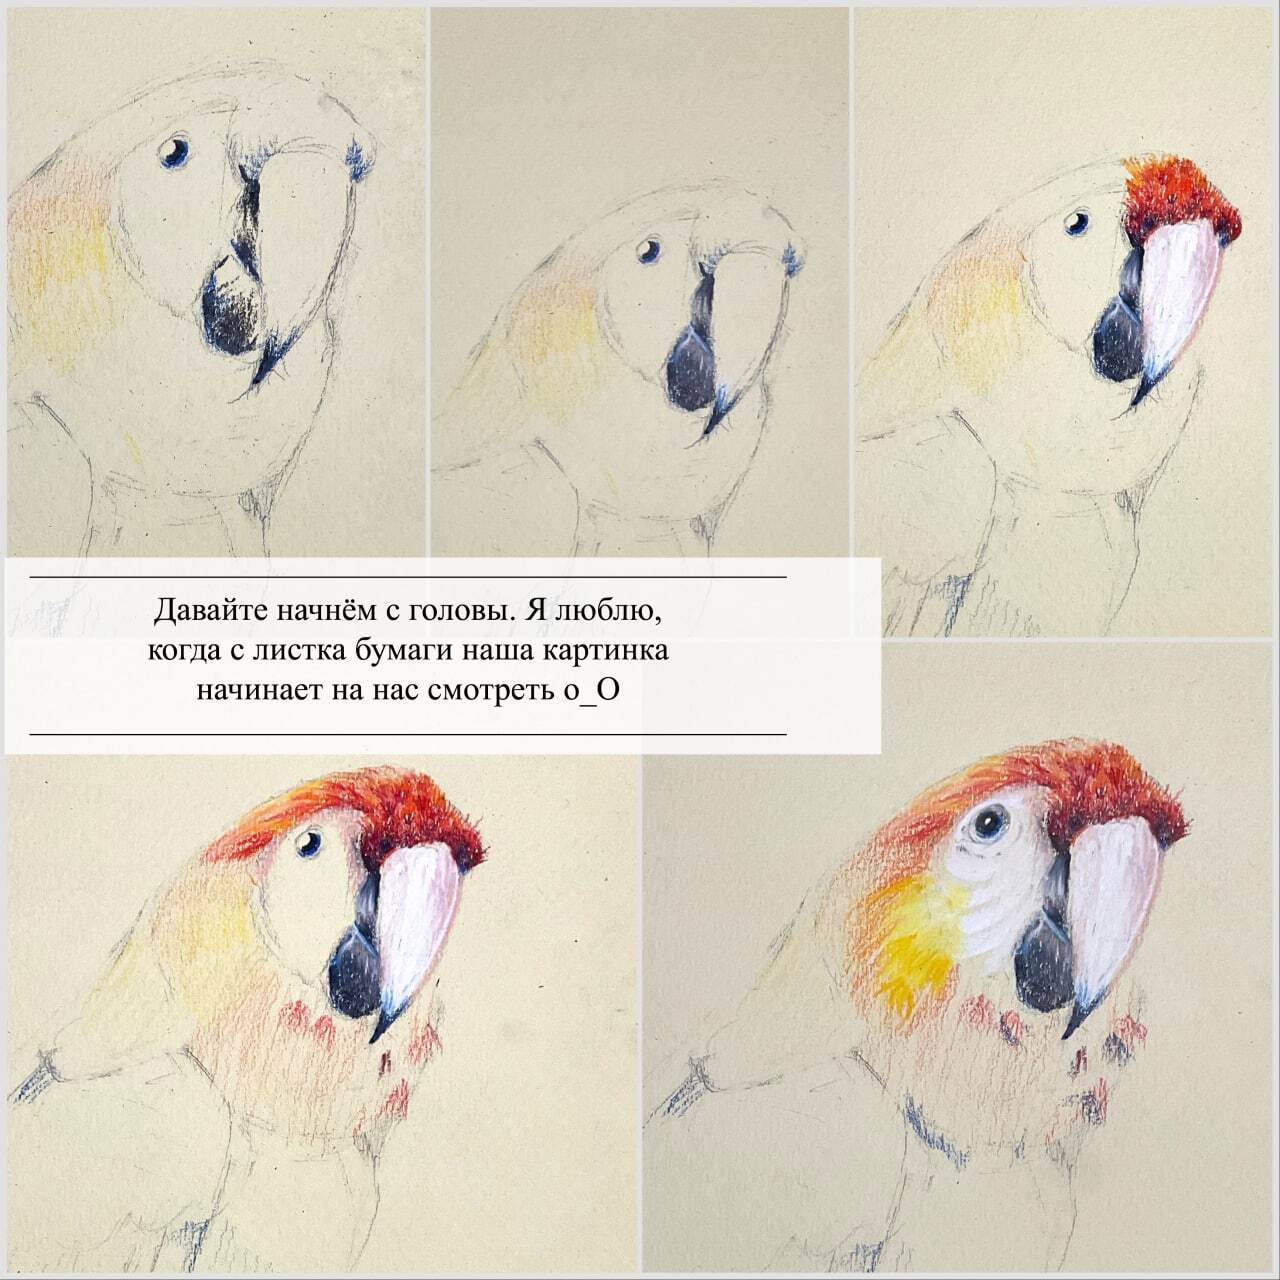 Lesson Red Macaw - My, Lesson, Drawing lessons, Colour pencils, A parrot, Watercolor pencils, Sketch, Art, Longpost, Macaw parrots